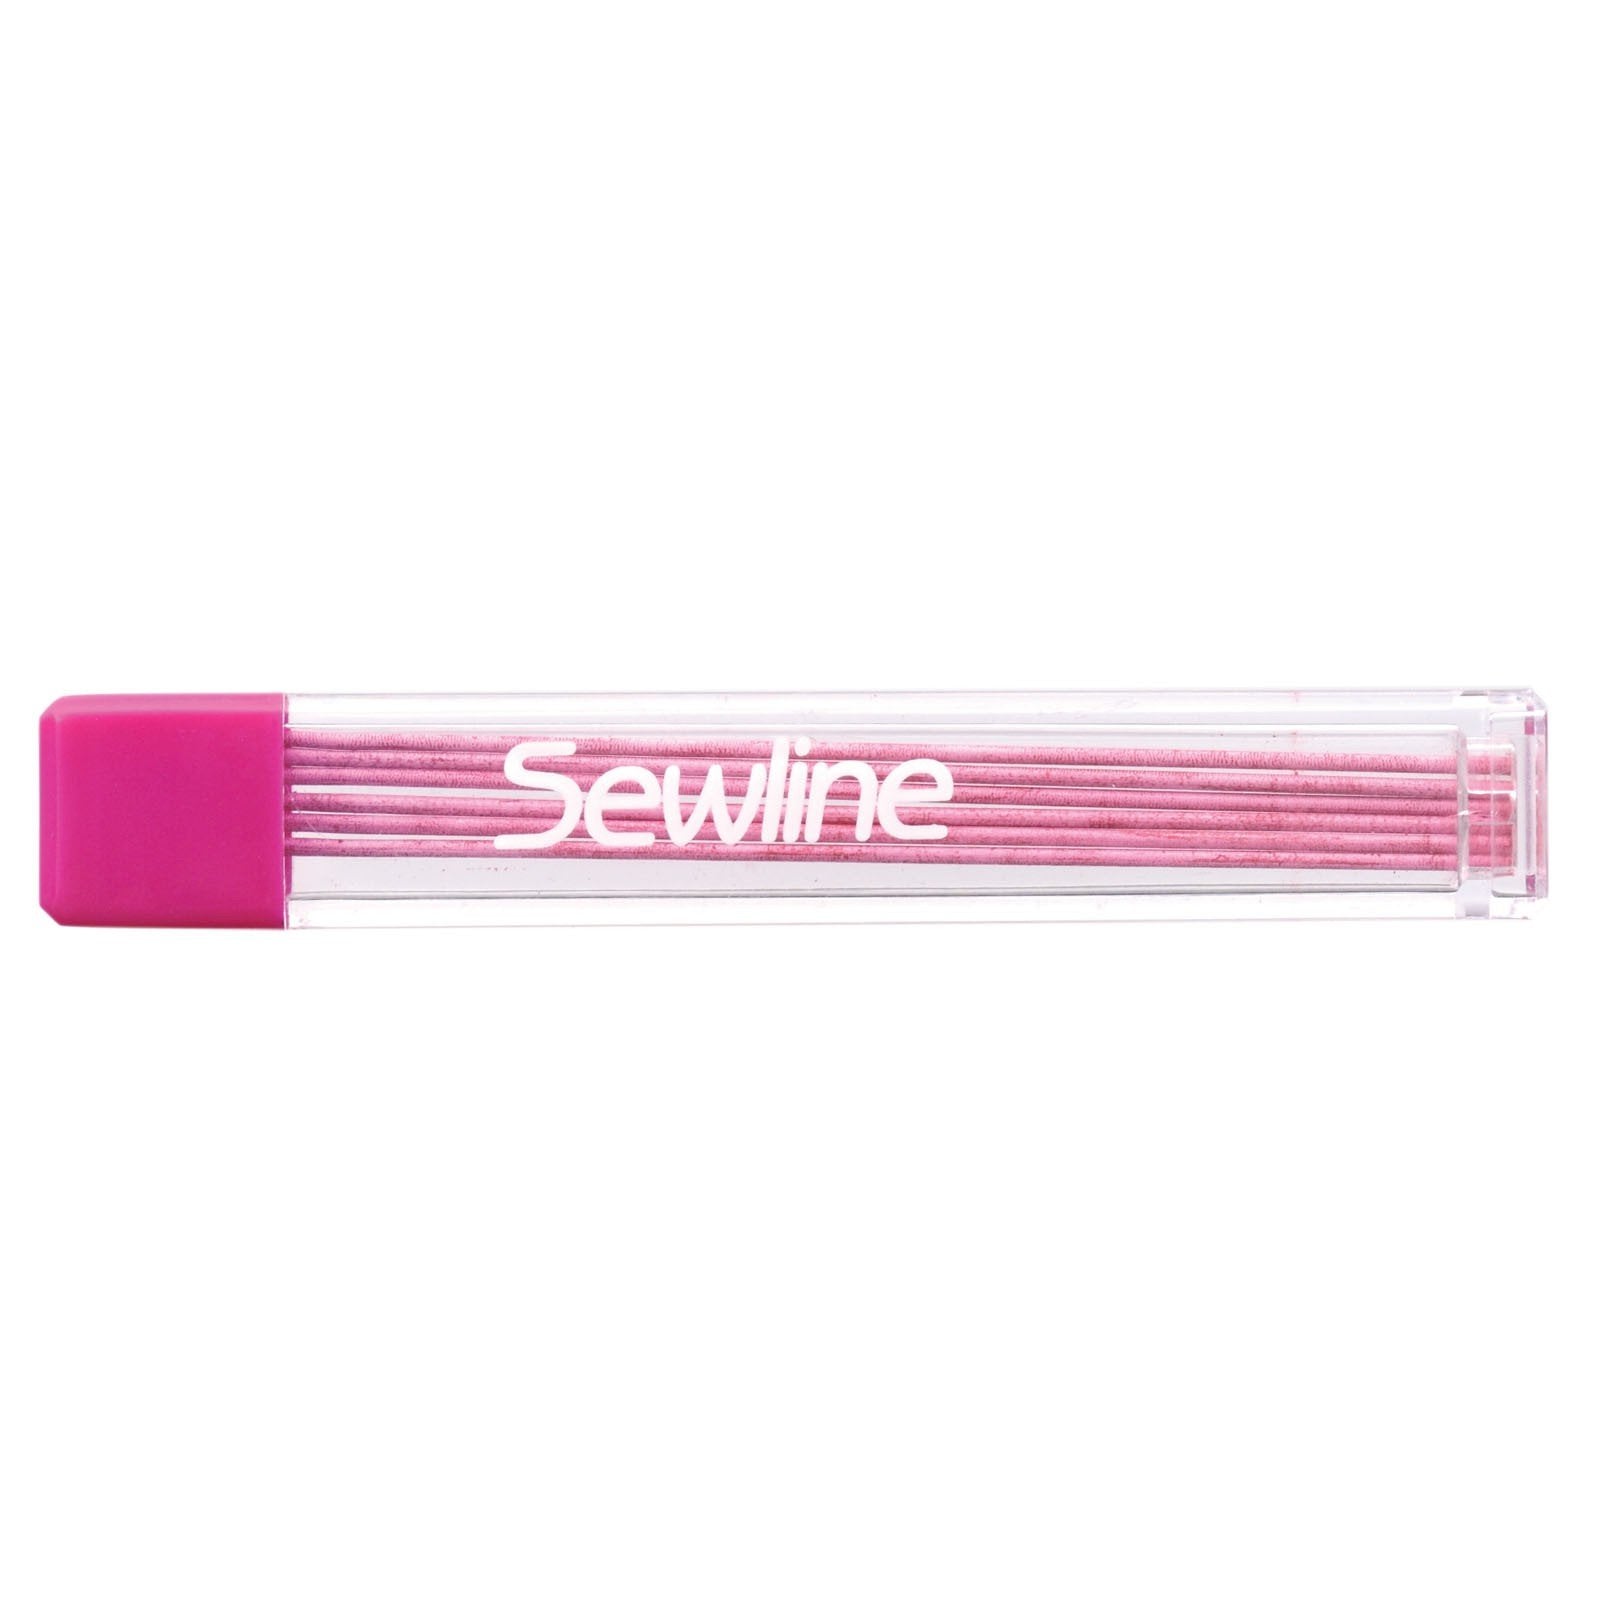 Sewline fabric pencil